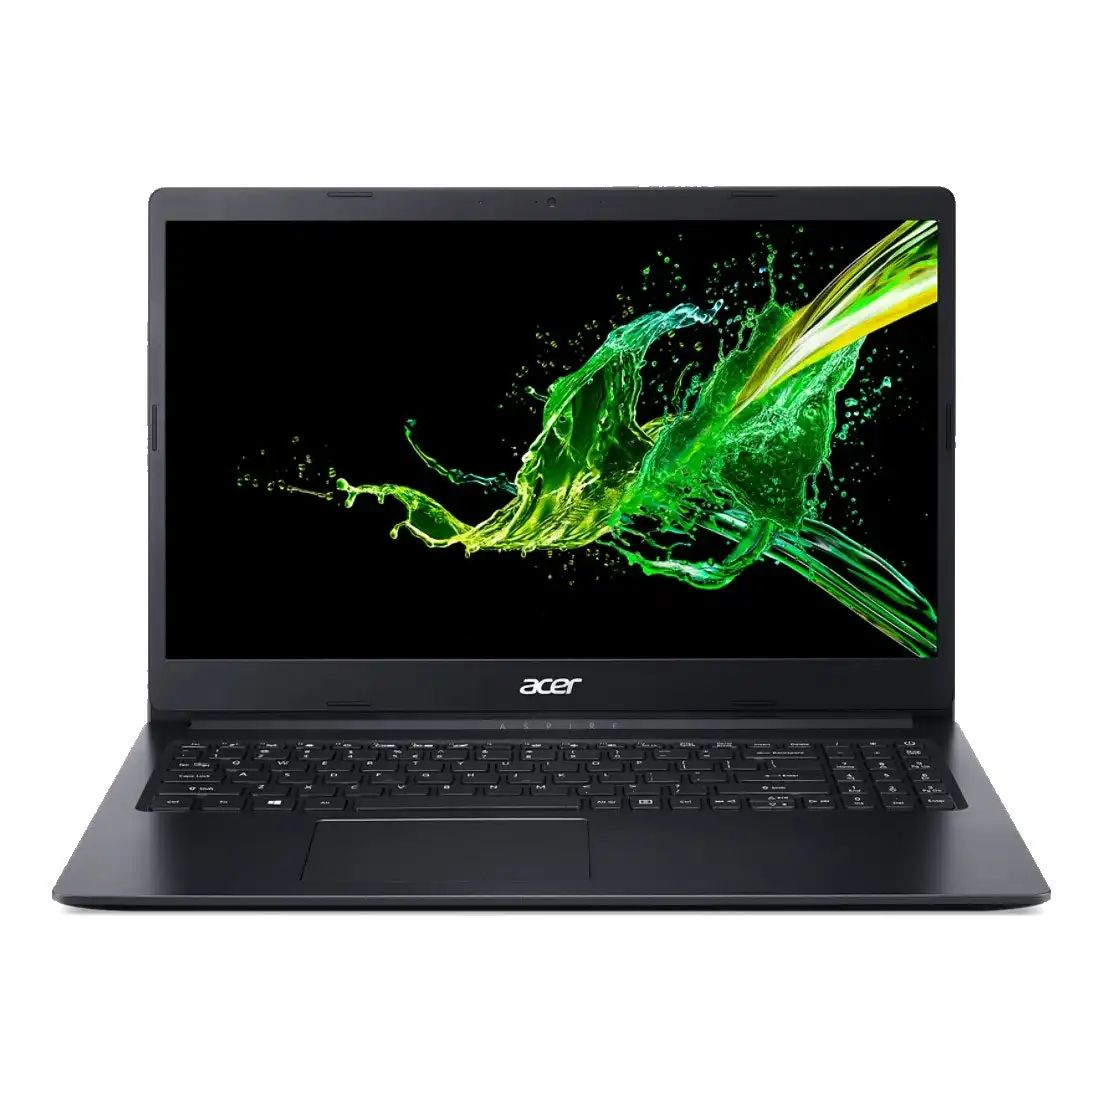 Acer Aspire 3 (15.6", N5030, 256GB/8GB, NX.A8XSA.001) Laptop Black[Refurbished] - As New